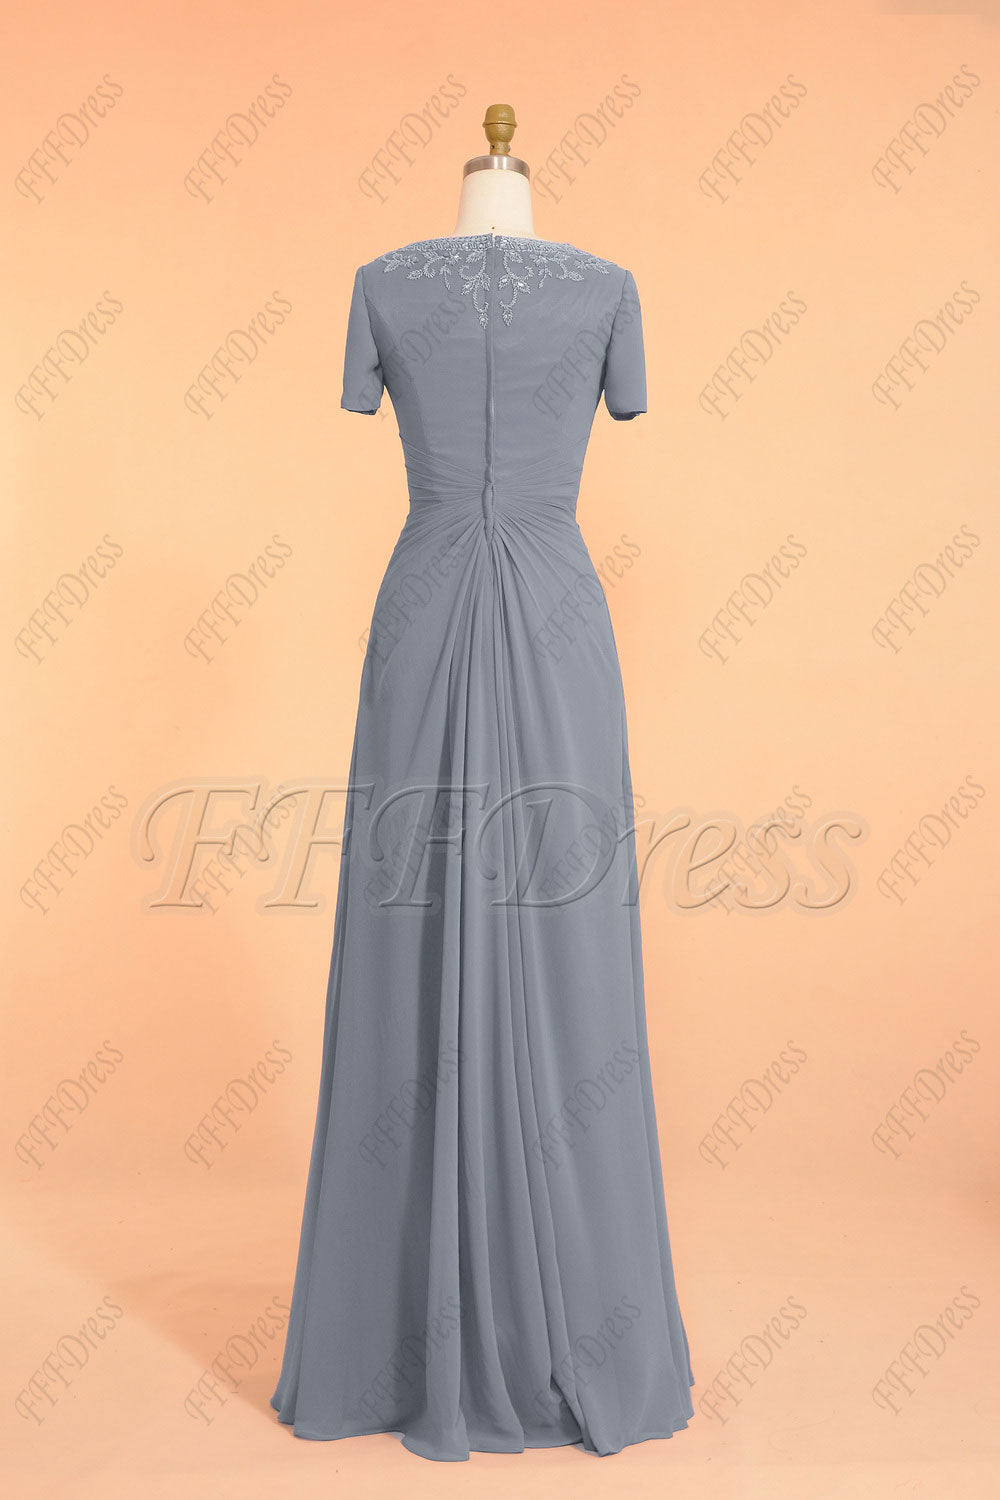 Dusty blue bridesmaid dresses